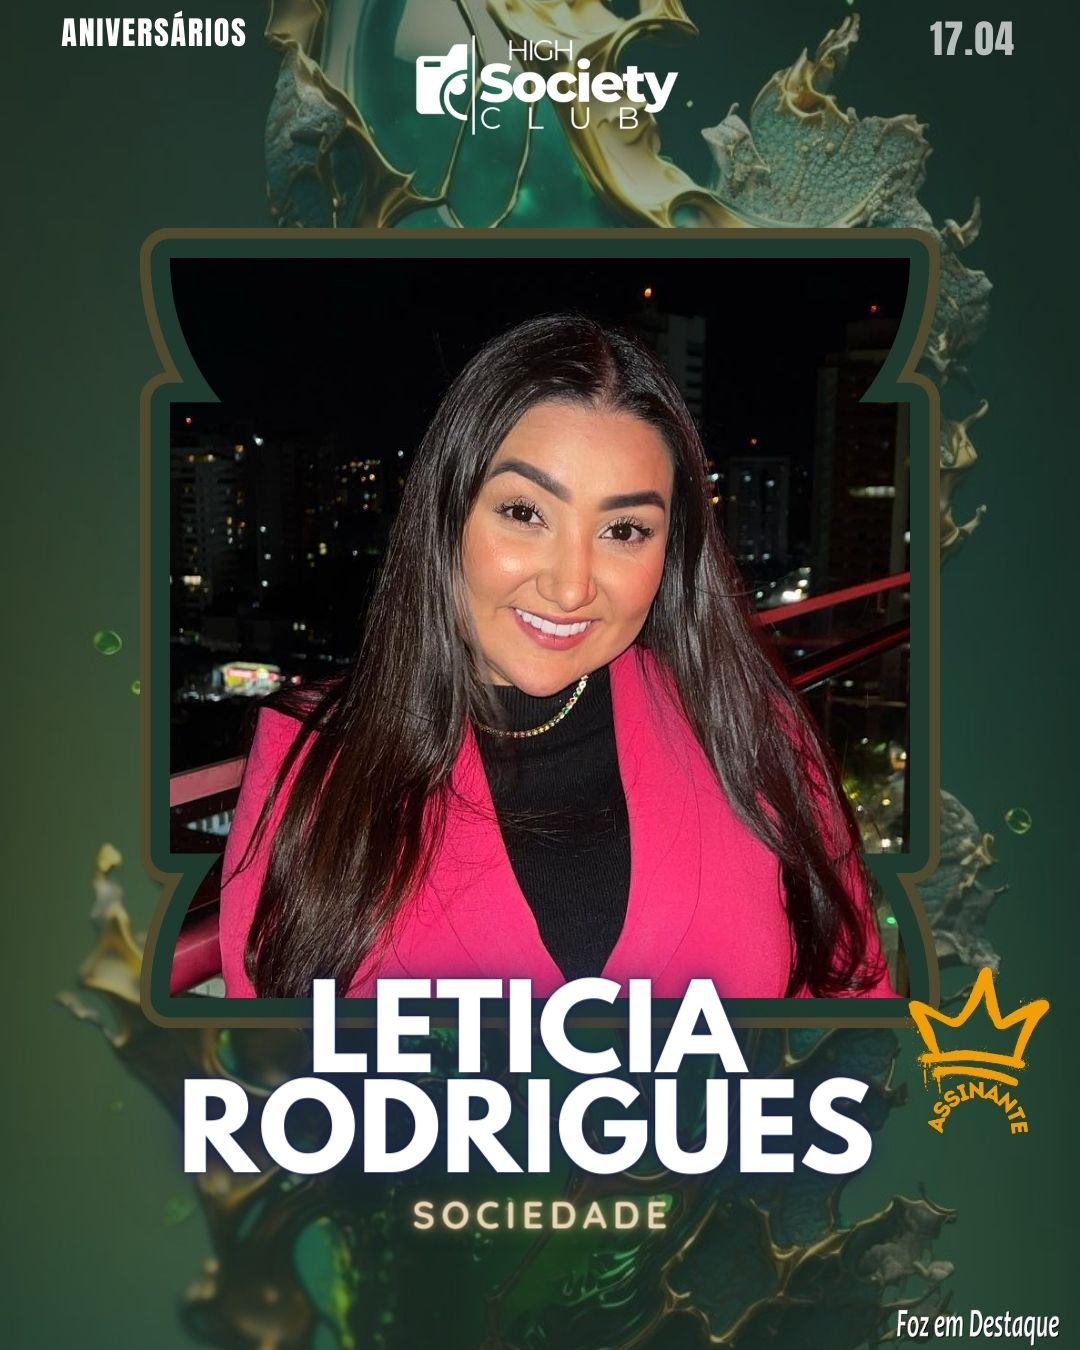 Leticia Rodrigues - High Society Club Foz em Destaque